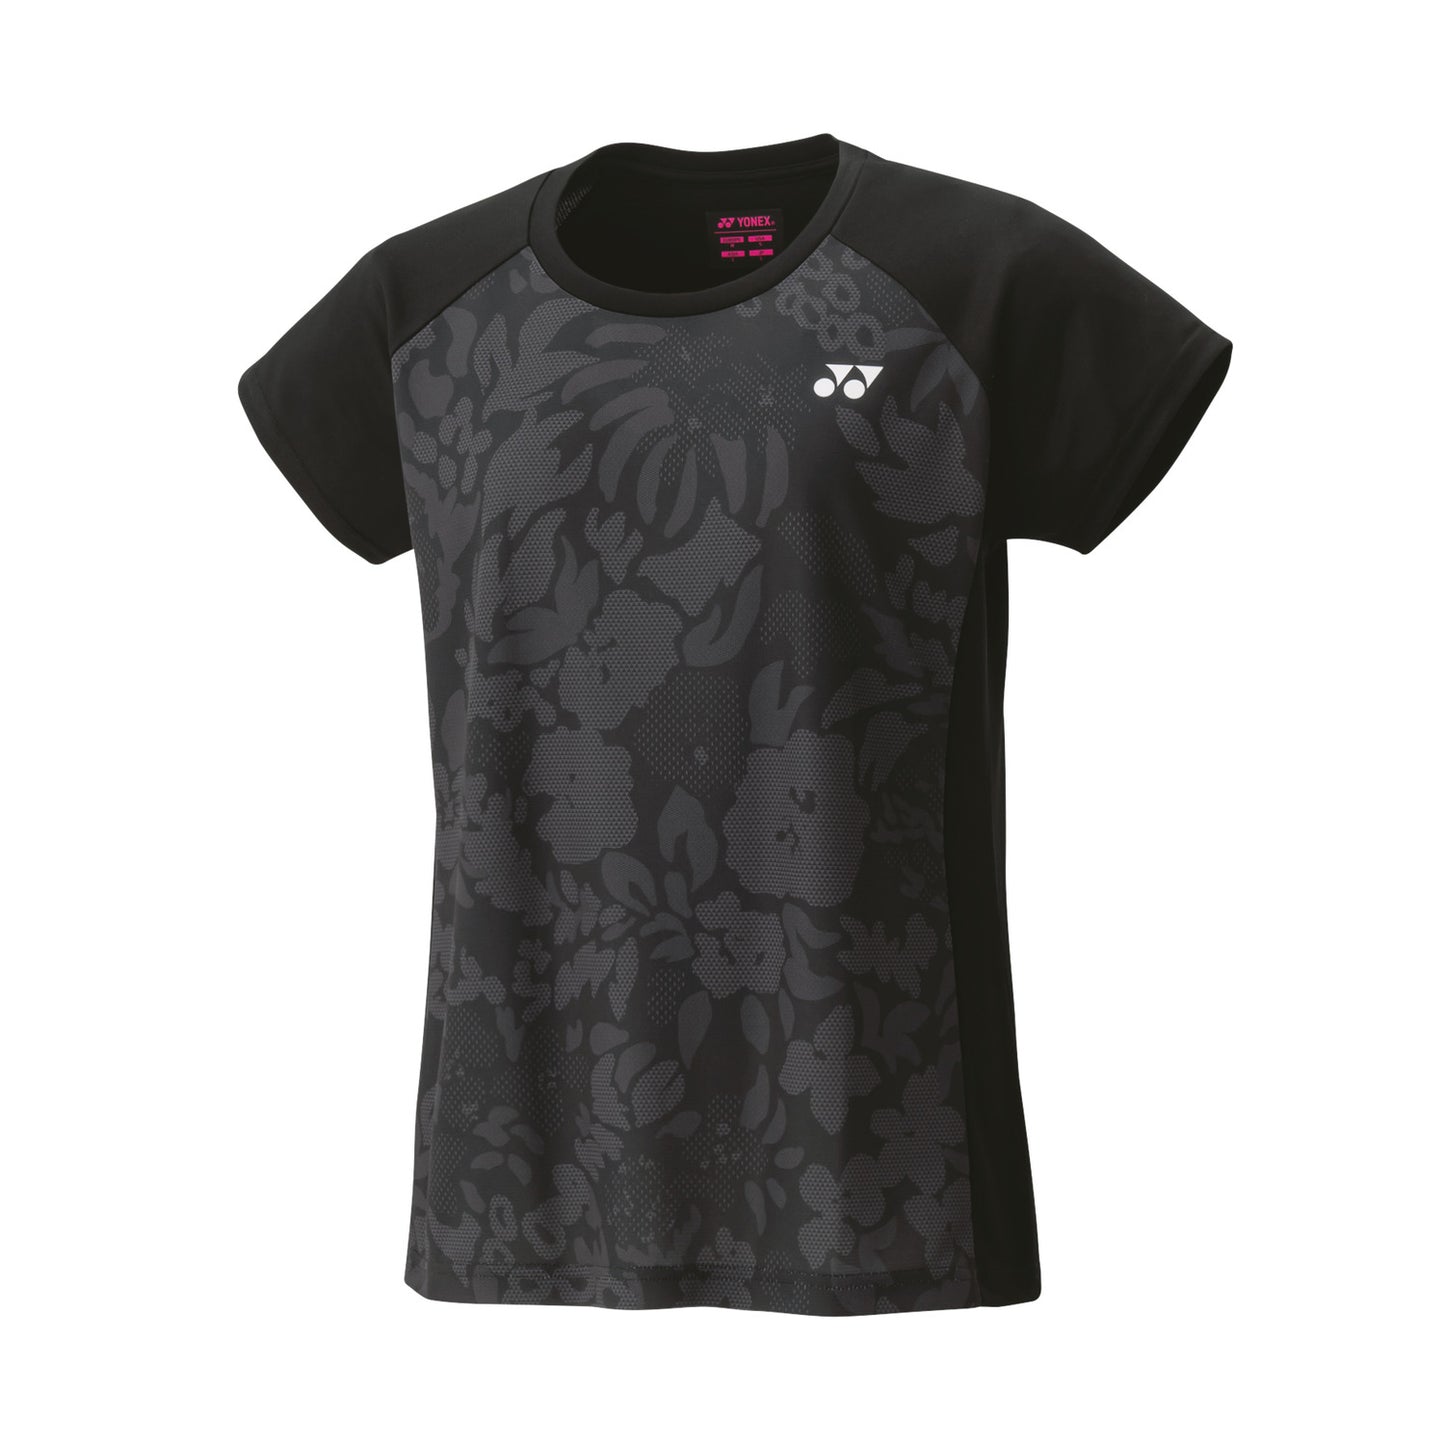 YONEX Women's Badminton Shirt 16633 INANTON REPLICA - Max Sports